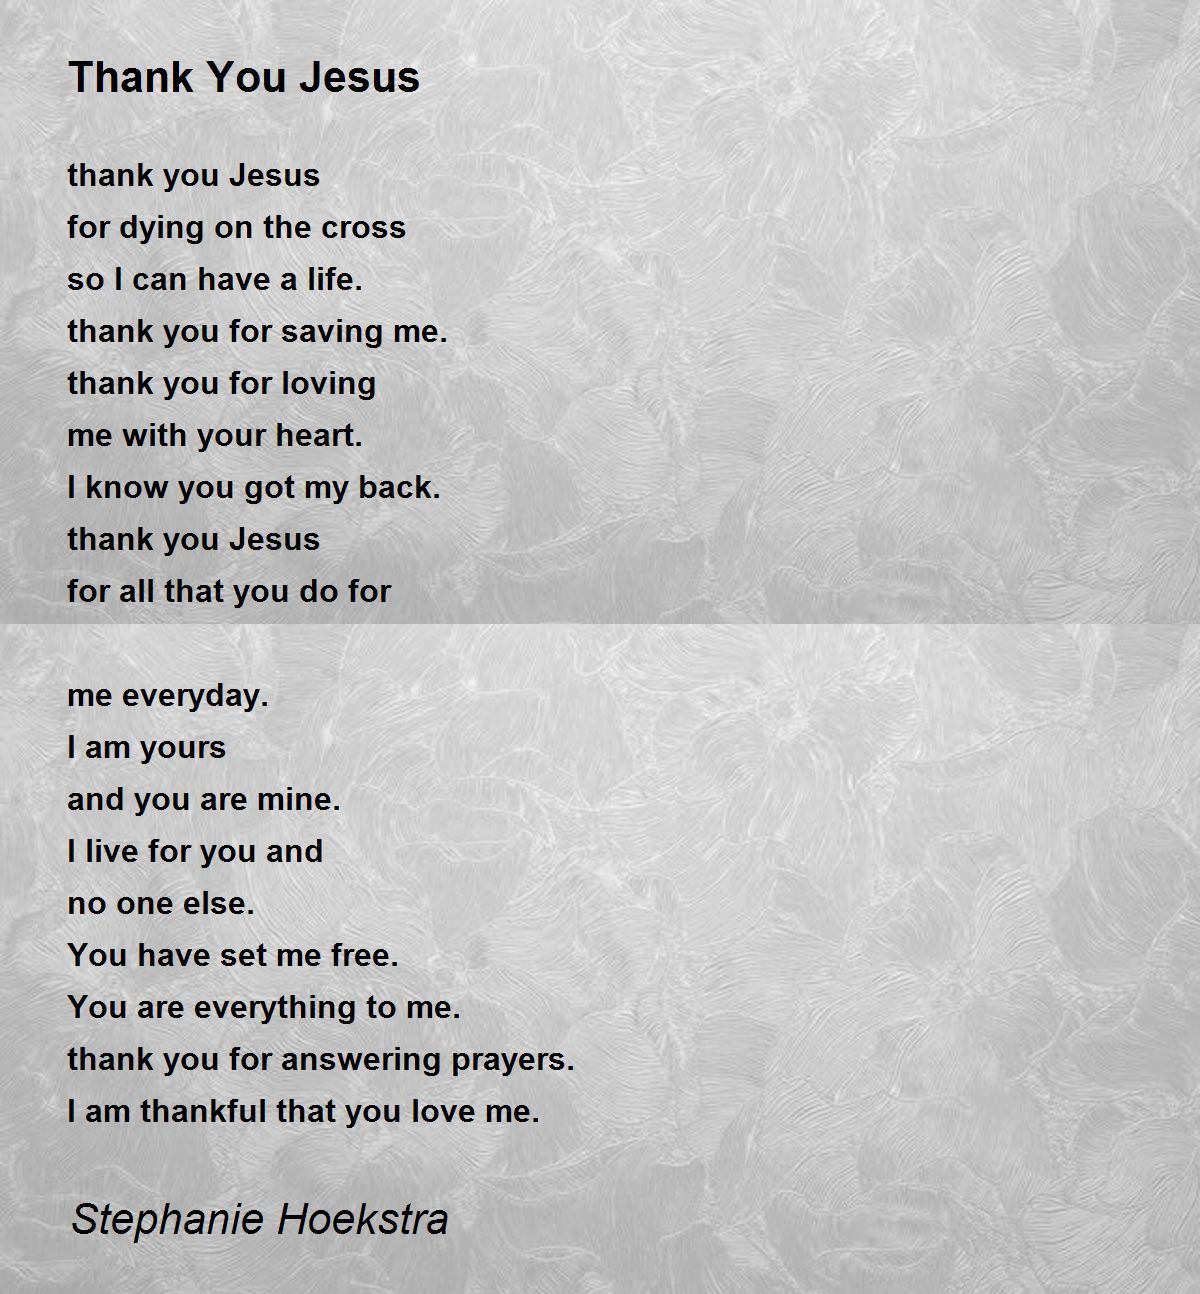 Thank You Jesus - Thank You Jesus Poem by Stephanie Hoekstra